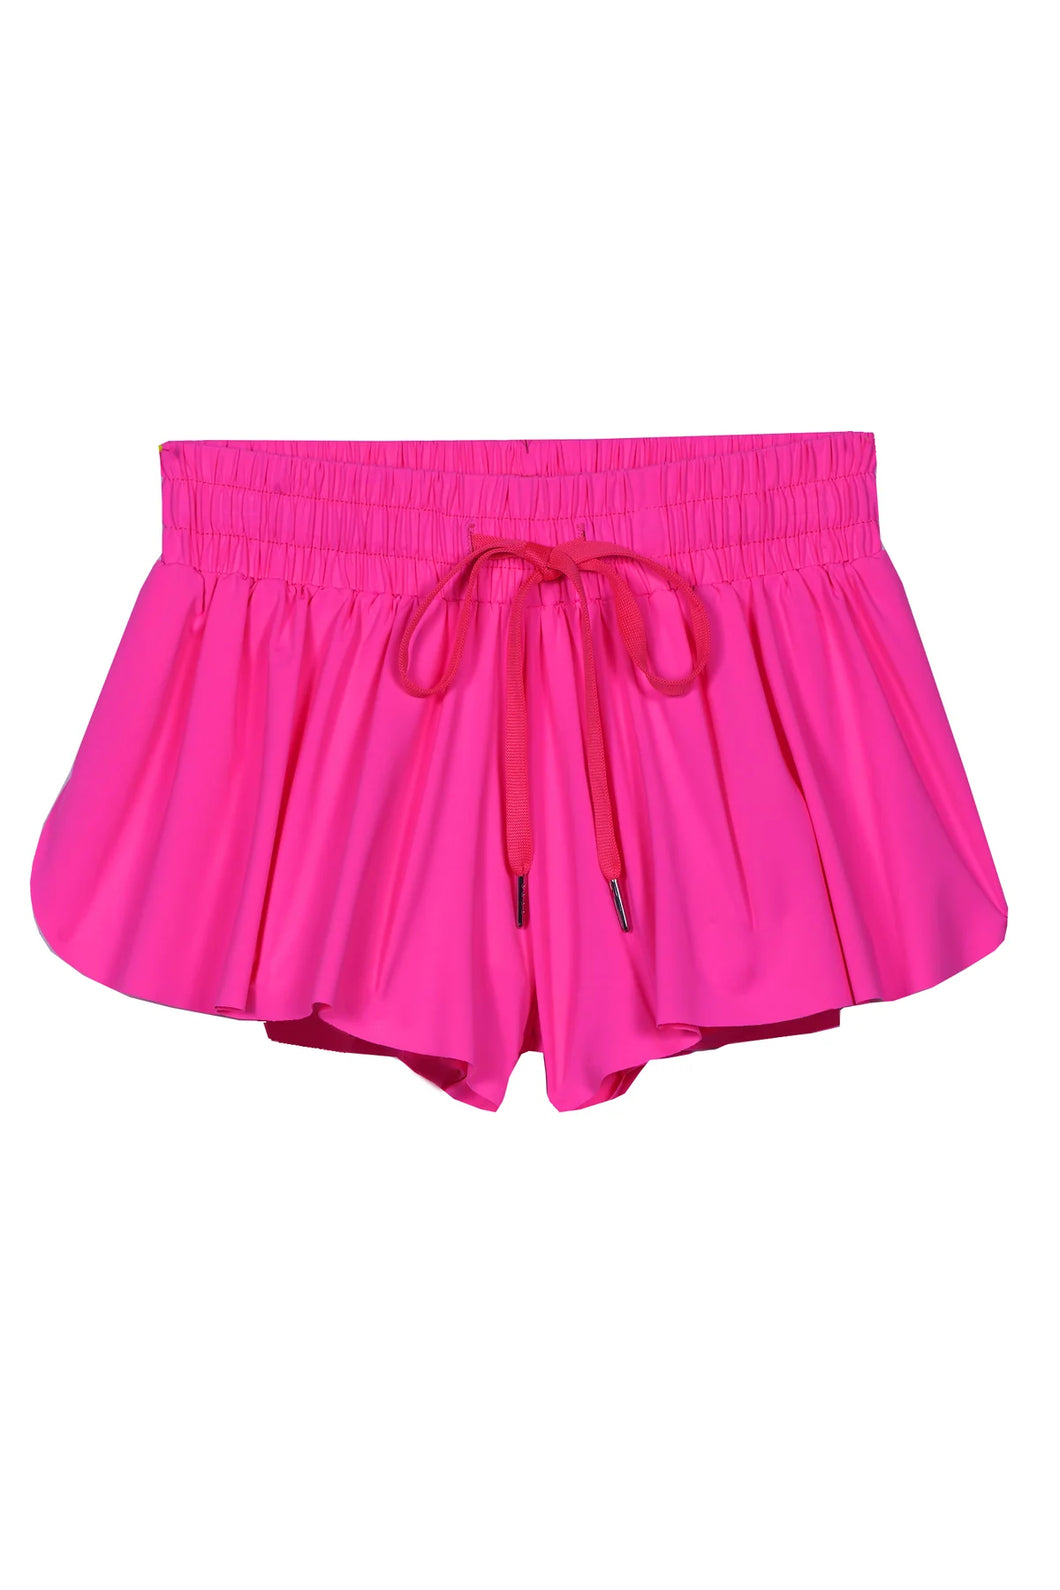 Katie J Farrah Shorts in Hot Pink